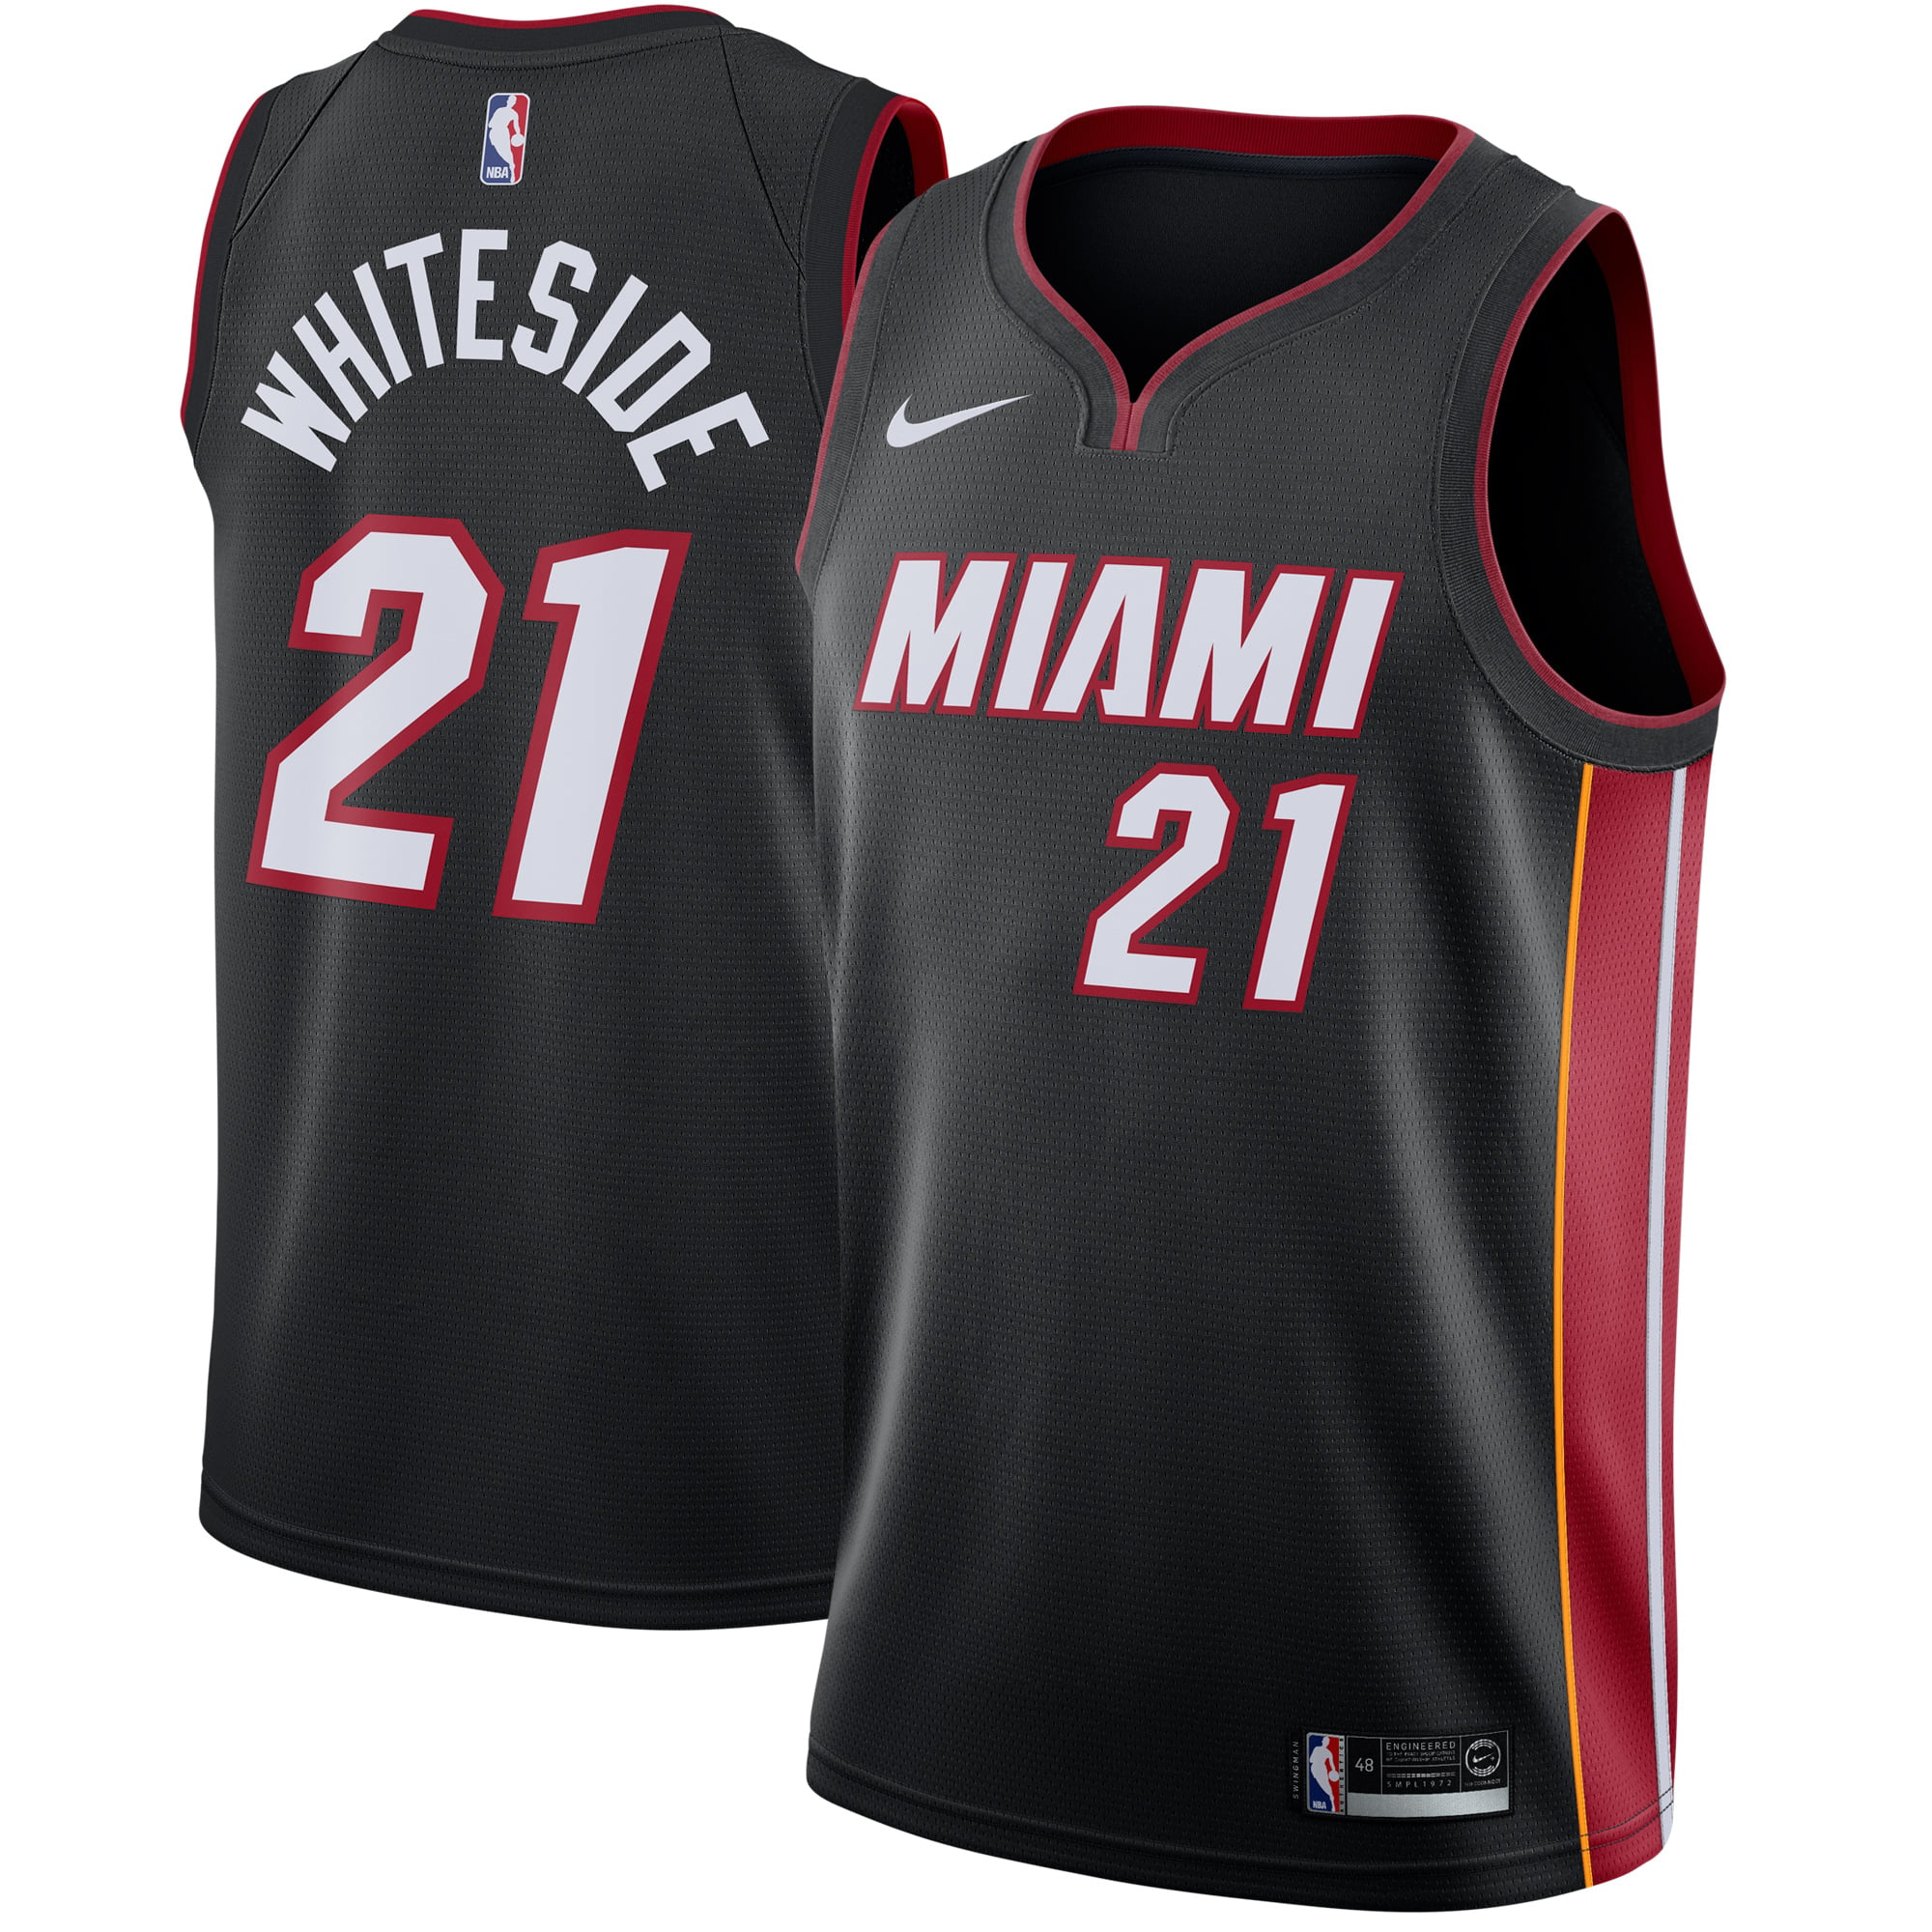 Miami Heat Nike Swingman Jersey 